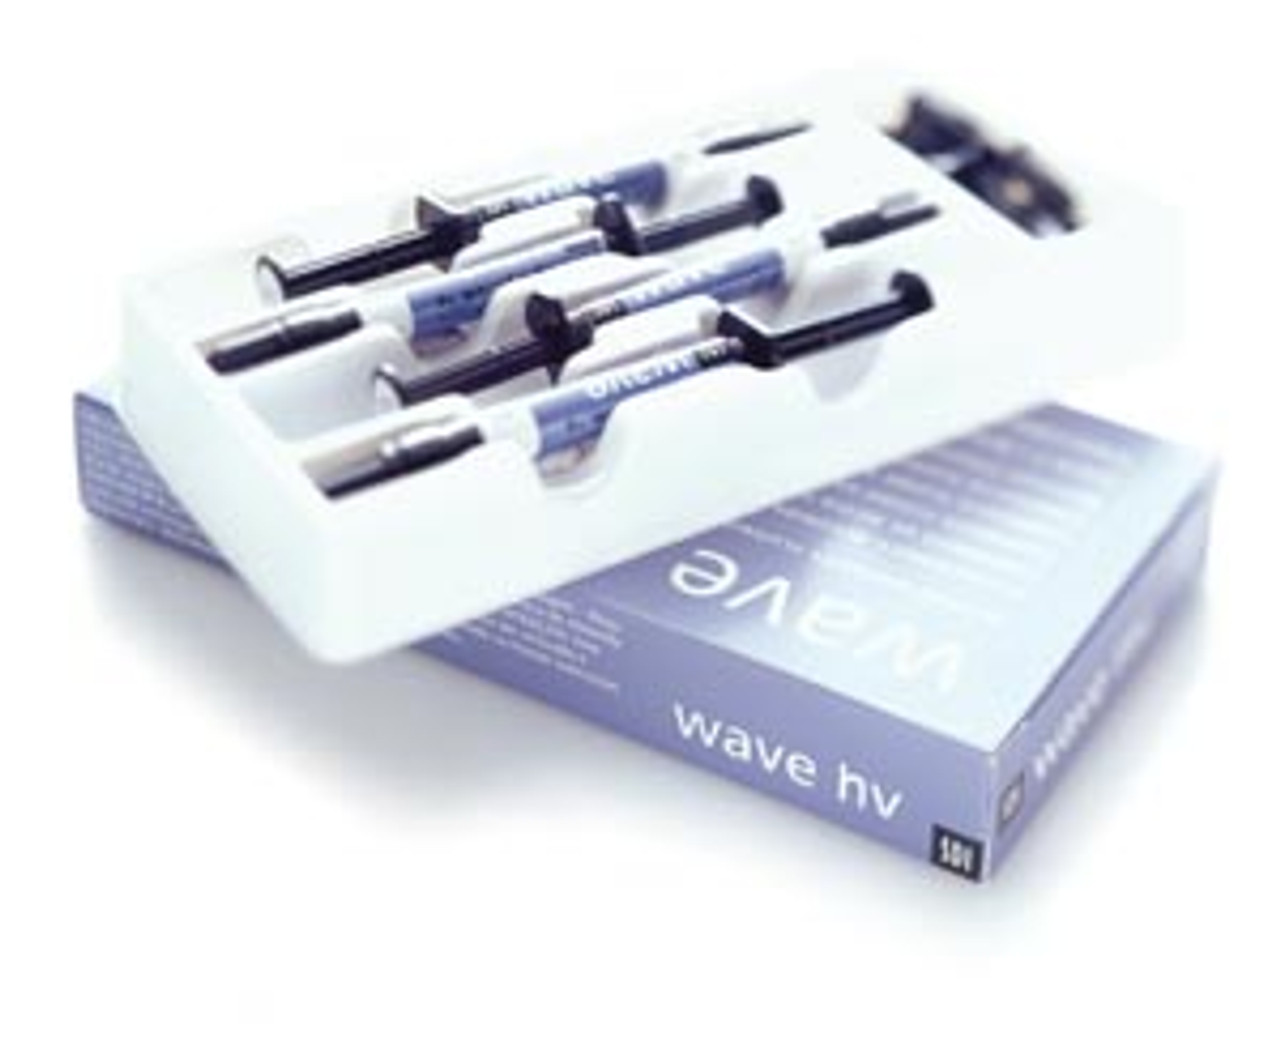 SDI Wave Flowable Composites, Wave HV Syringe Refill - Shade A3 Extra Light Yellow, 1 x 1g Syringe, 5 Applicator Tips 8210304